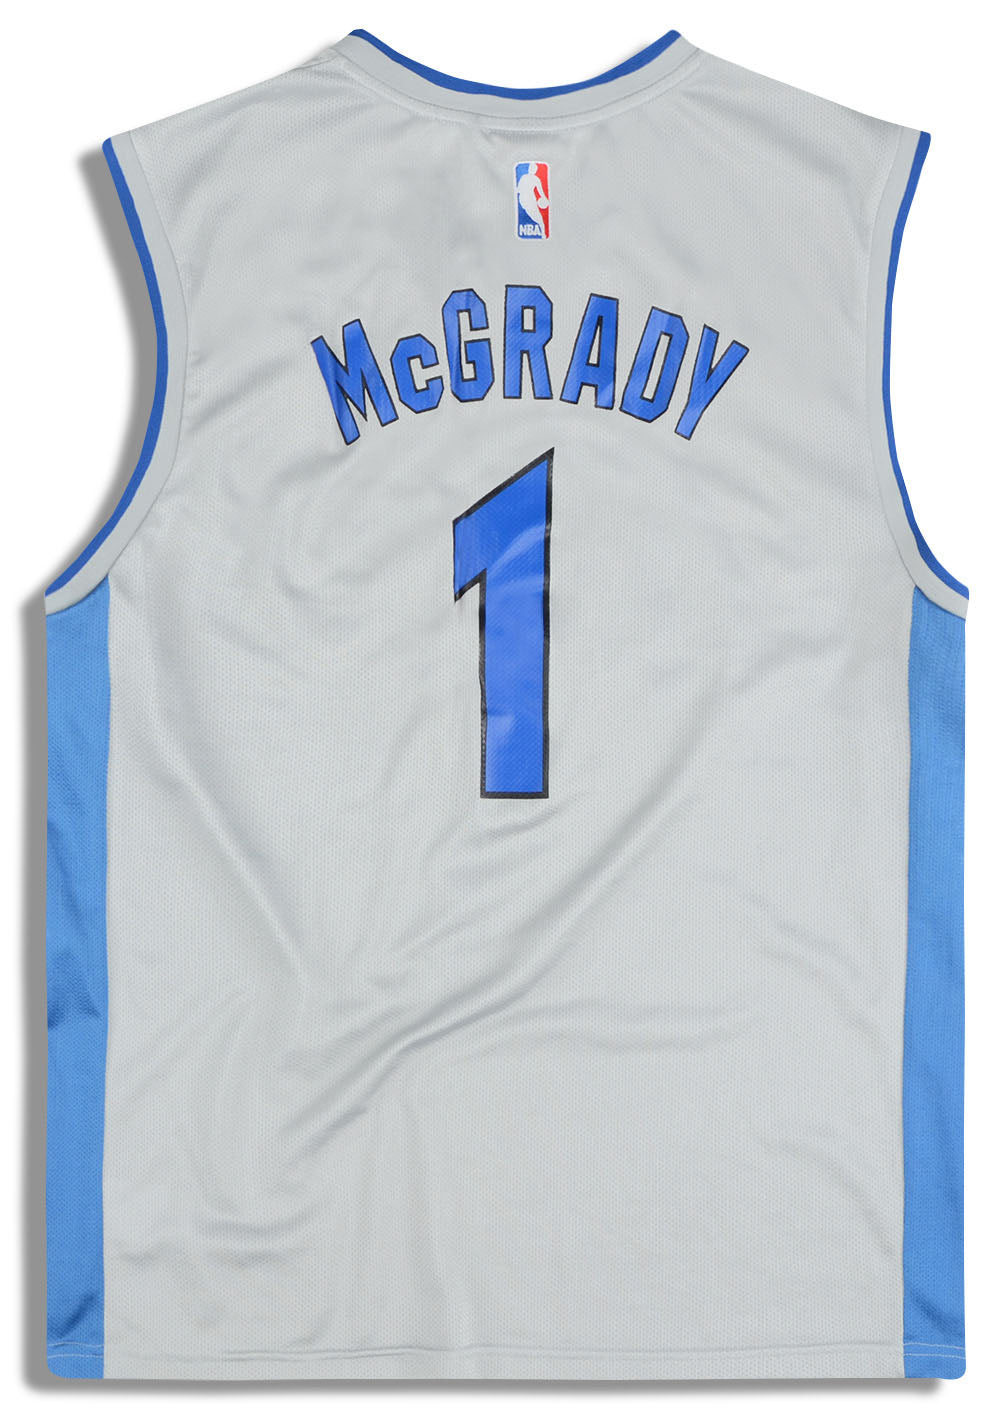 2002-03 ORLANDO MAGIC McGRADY #1 REEBOK JERSEY (ALTERNATE) M